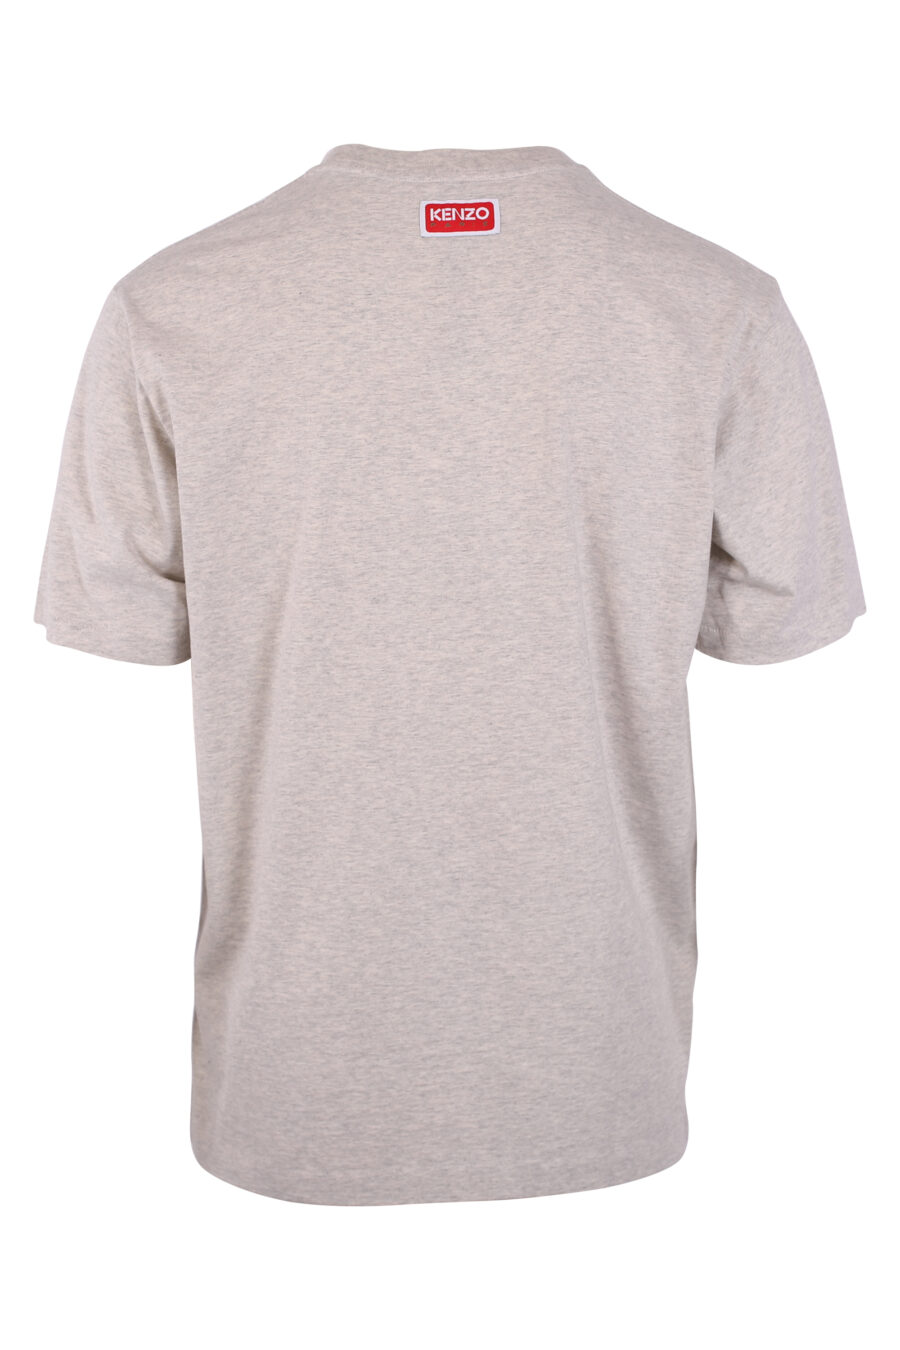 Camiseta gris con logo "flower" - IMG 9466